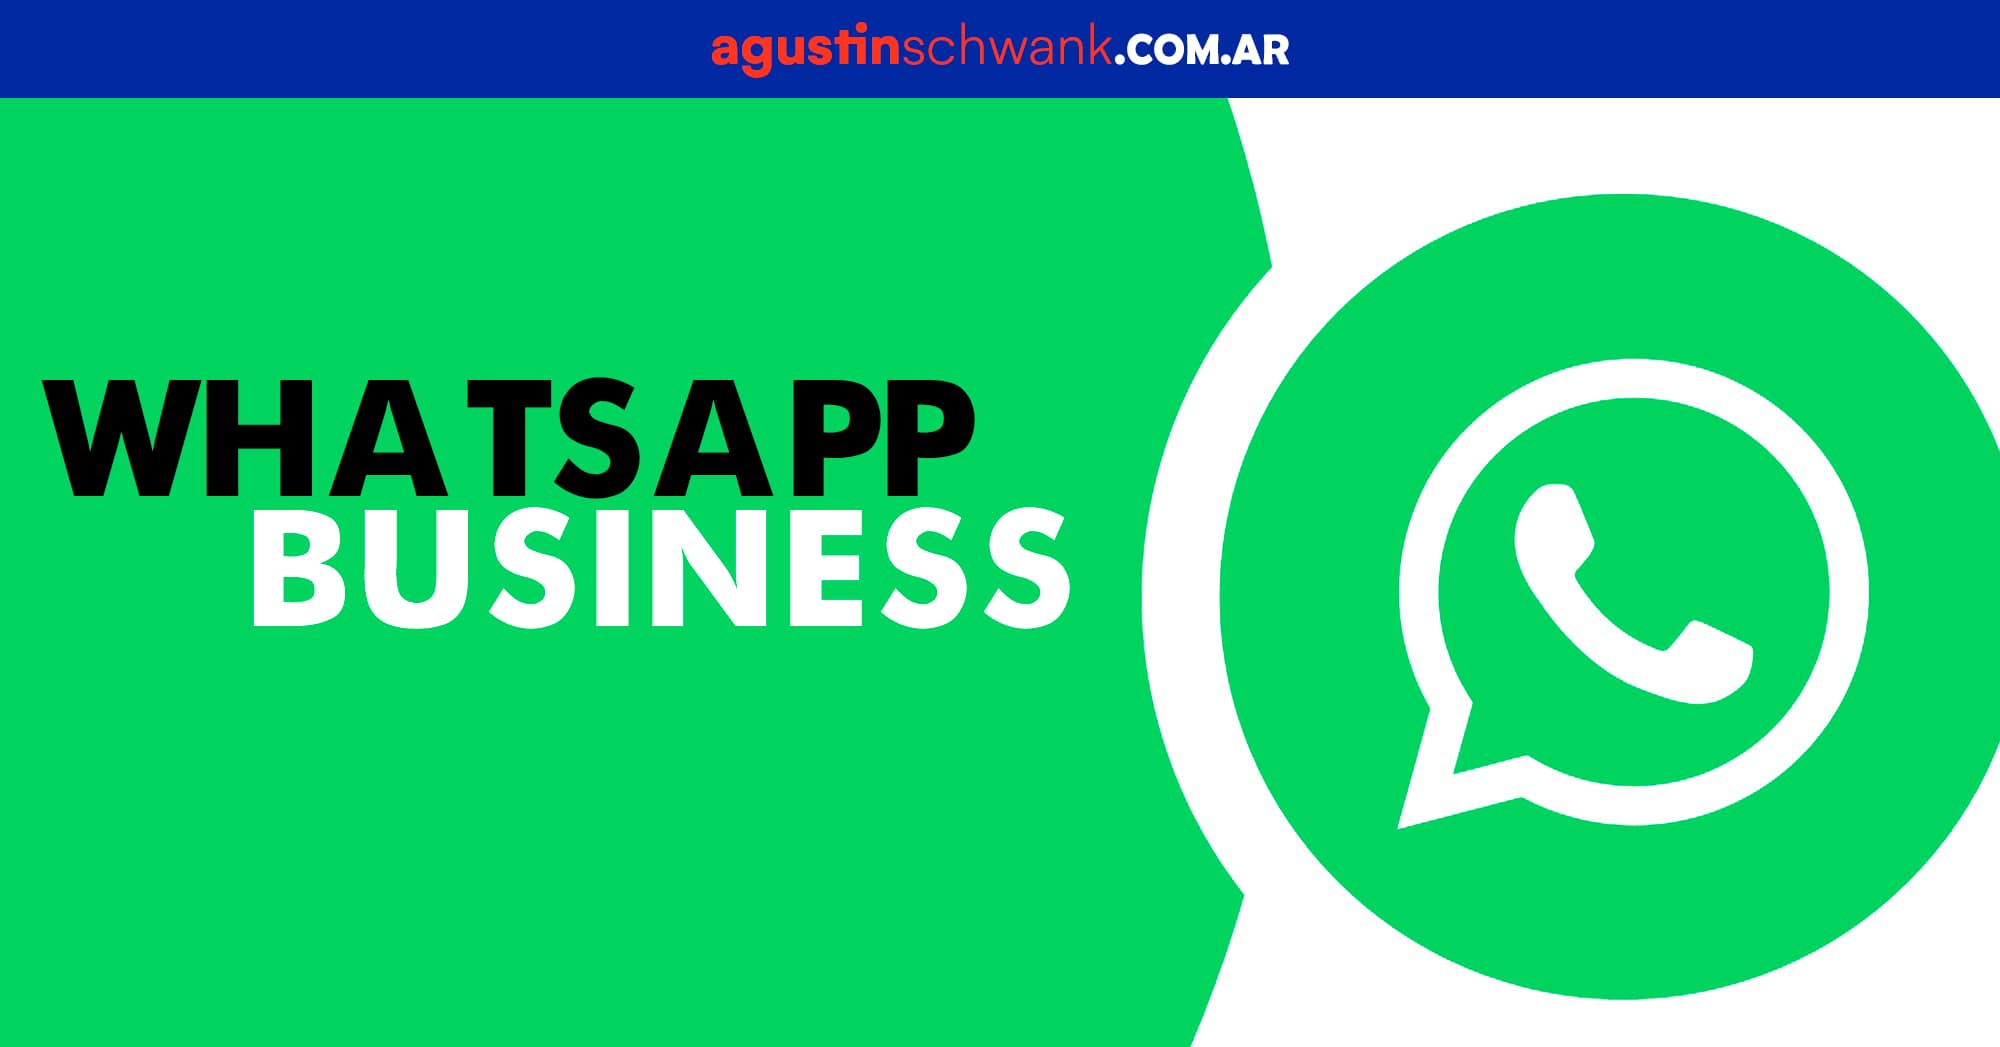 WhatsApp-Business-schwank